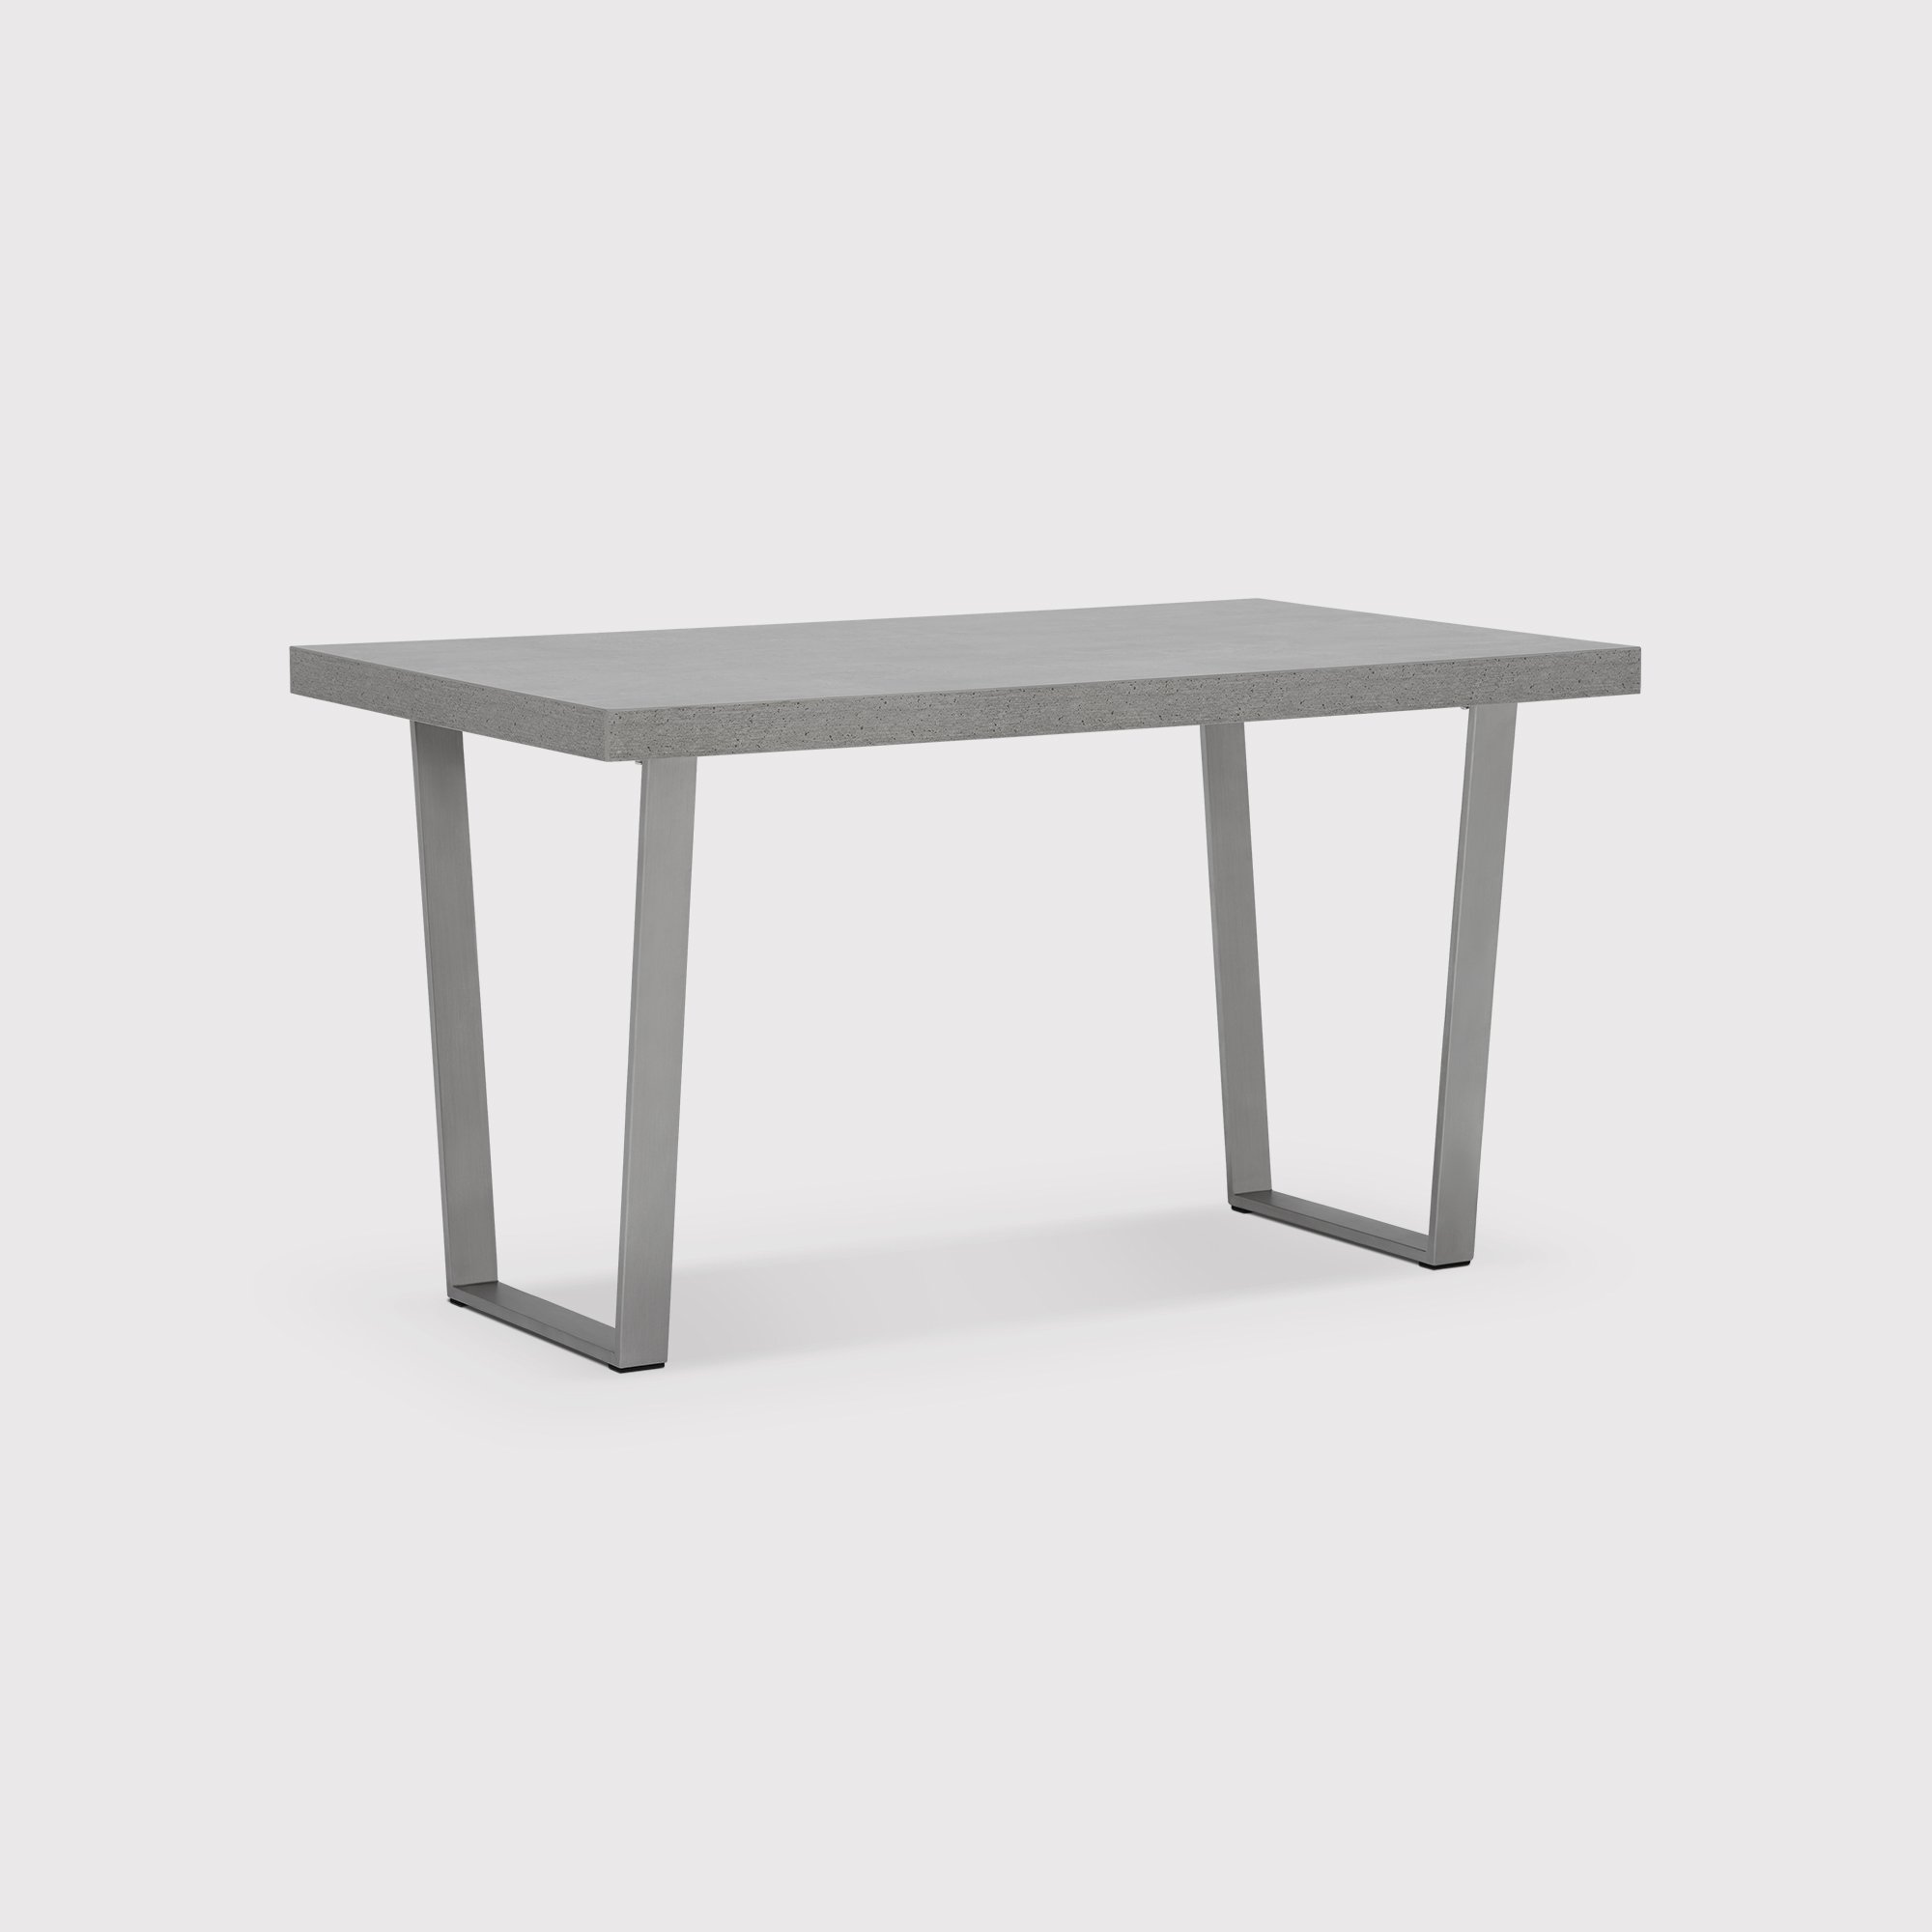 Photo of 135cm Halmstad dining table 135cm in grey w135cm